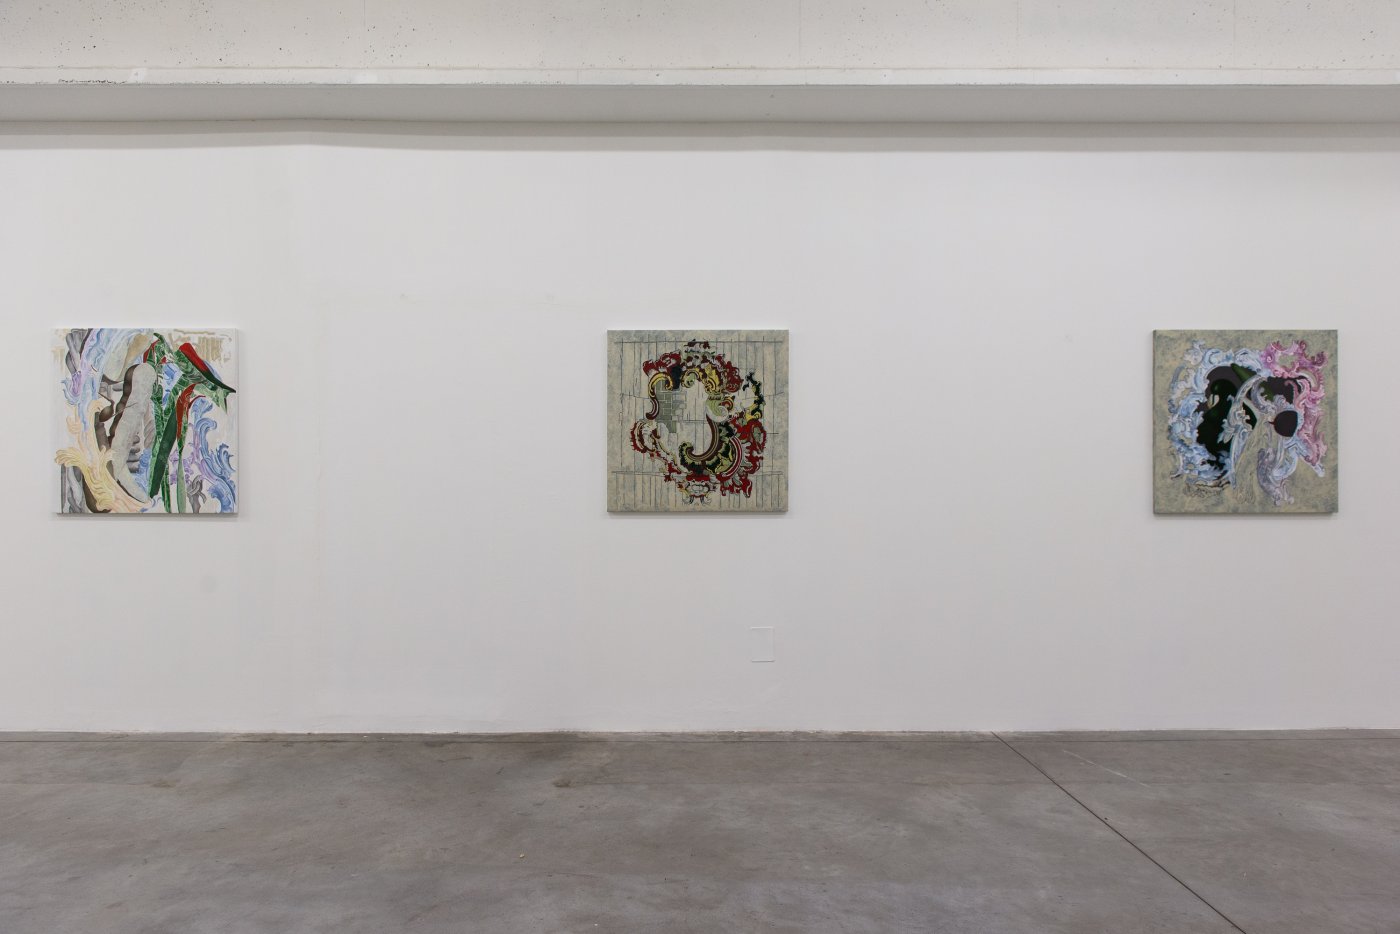 Installation image for Debora Hirsch: Até aqui, at Boccanera